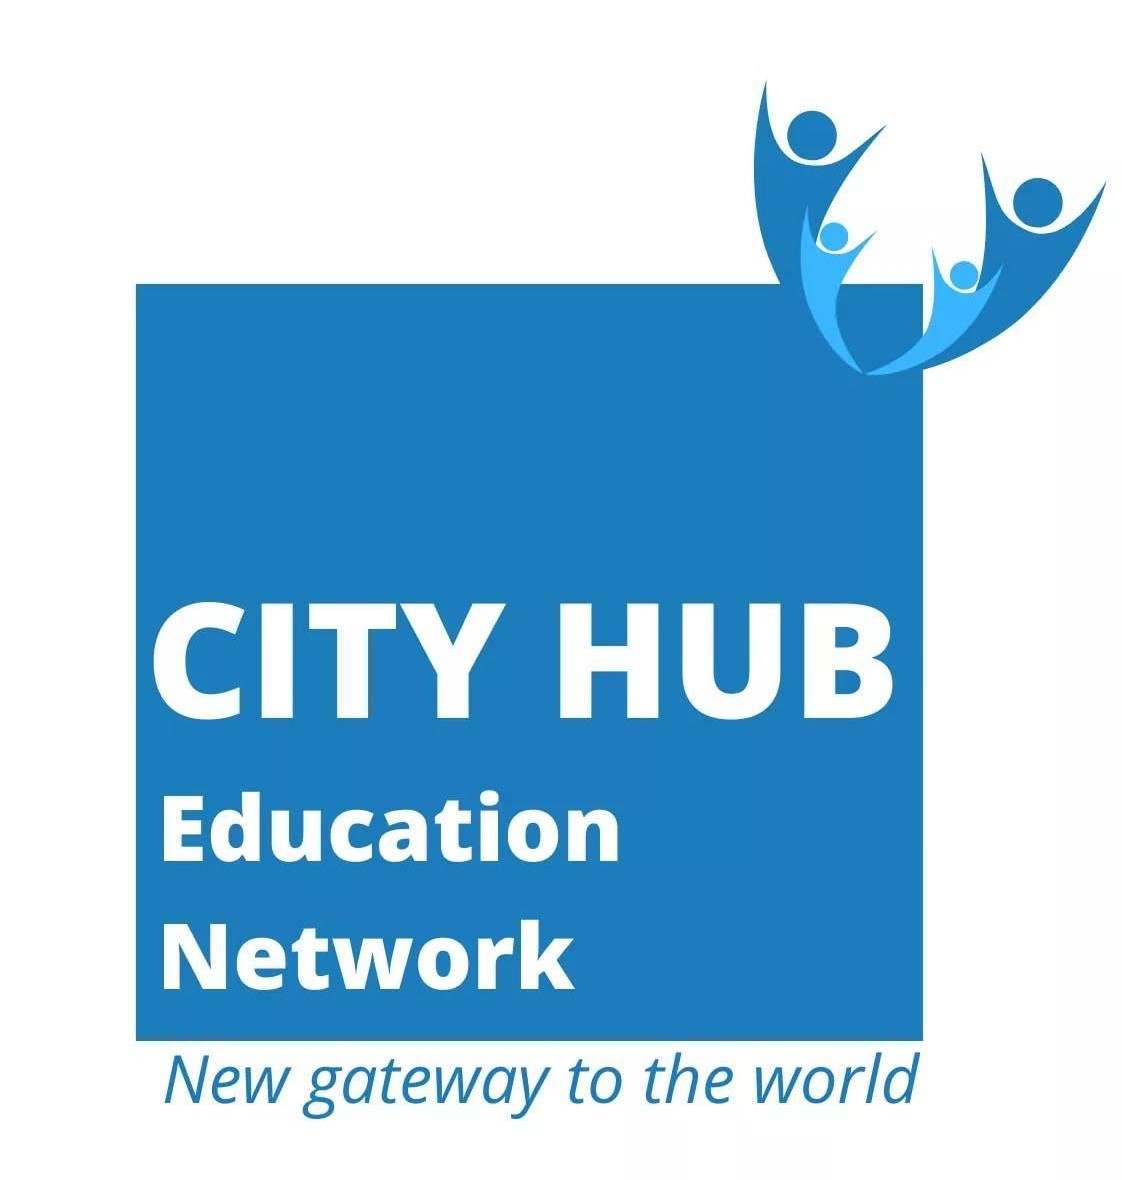 City Hub Education Network